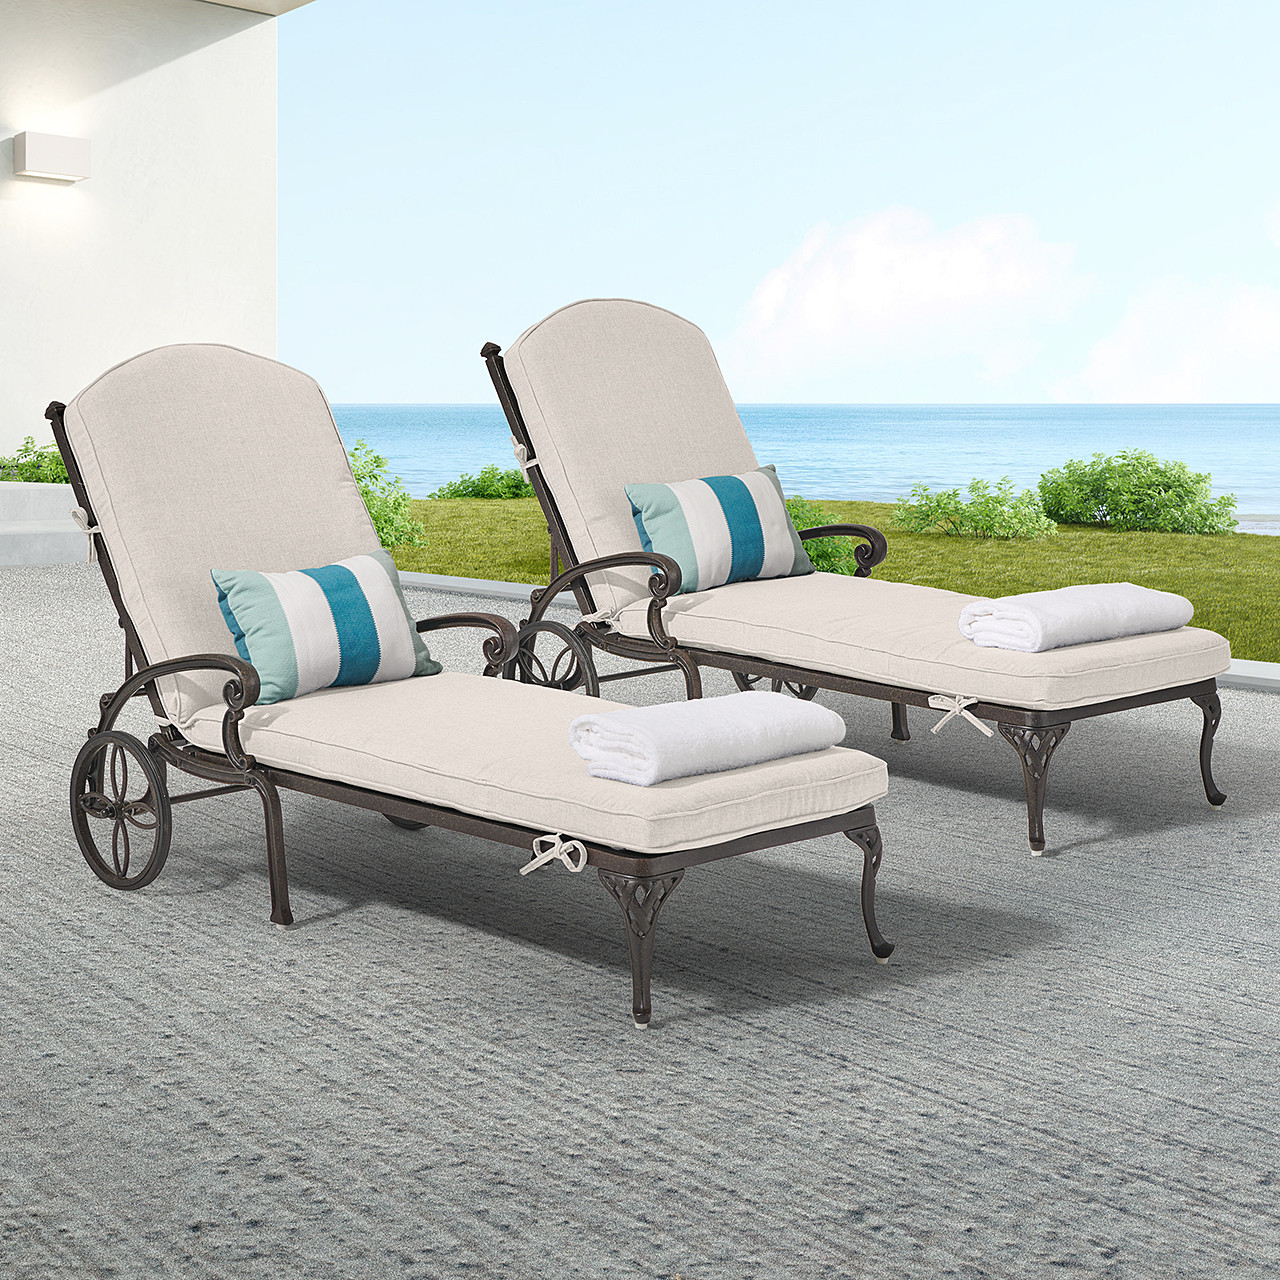 Naples Cast Aluminum with Cushions 2 Piece Chaise Lounge Set